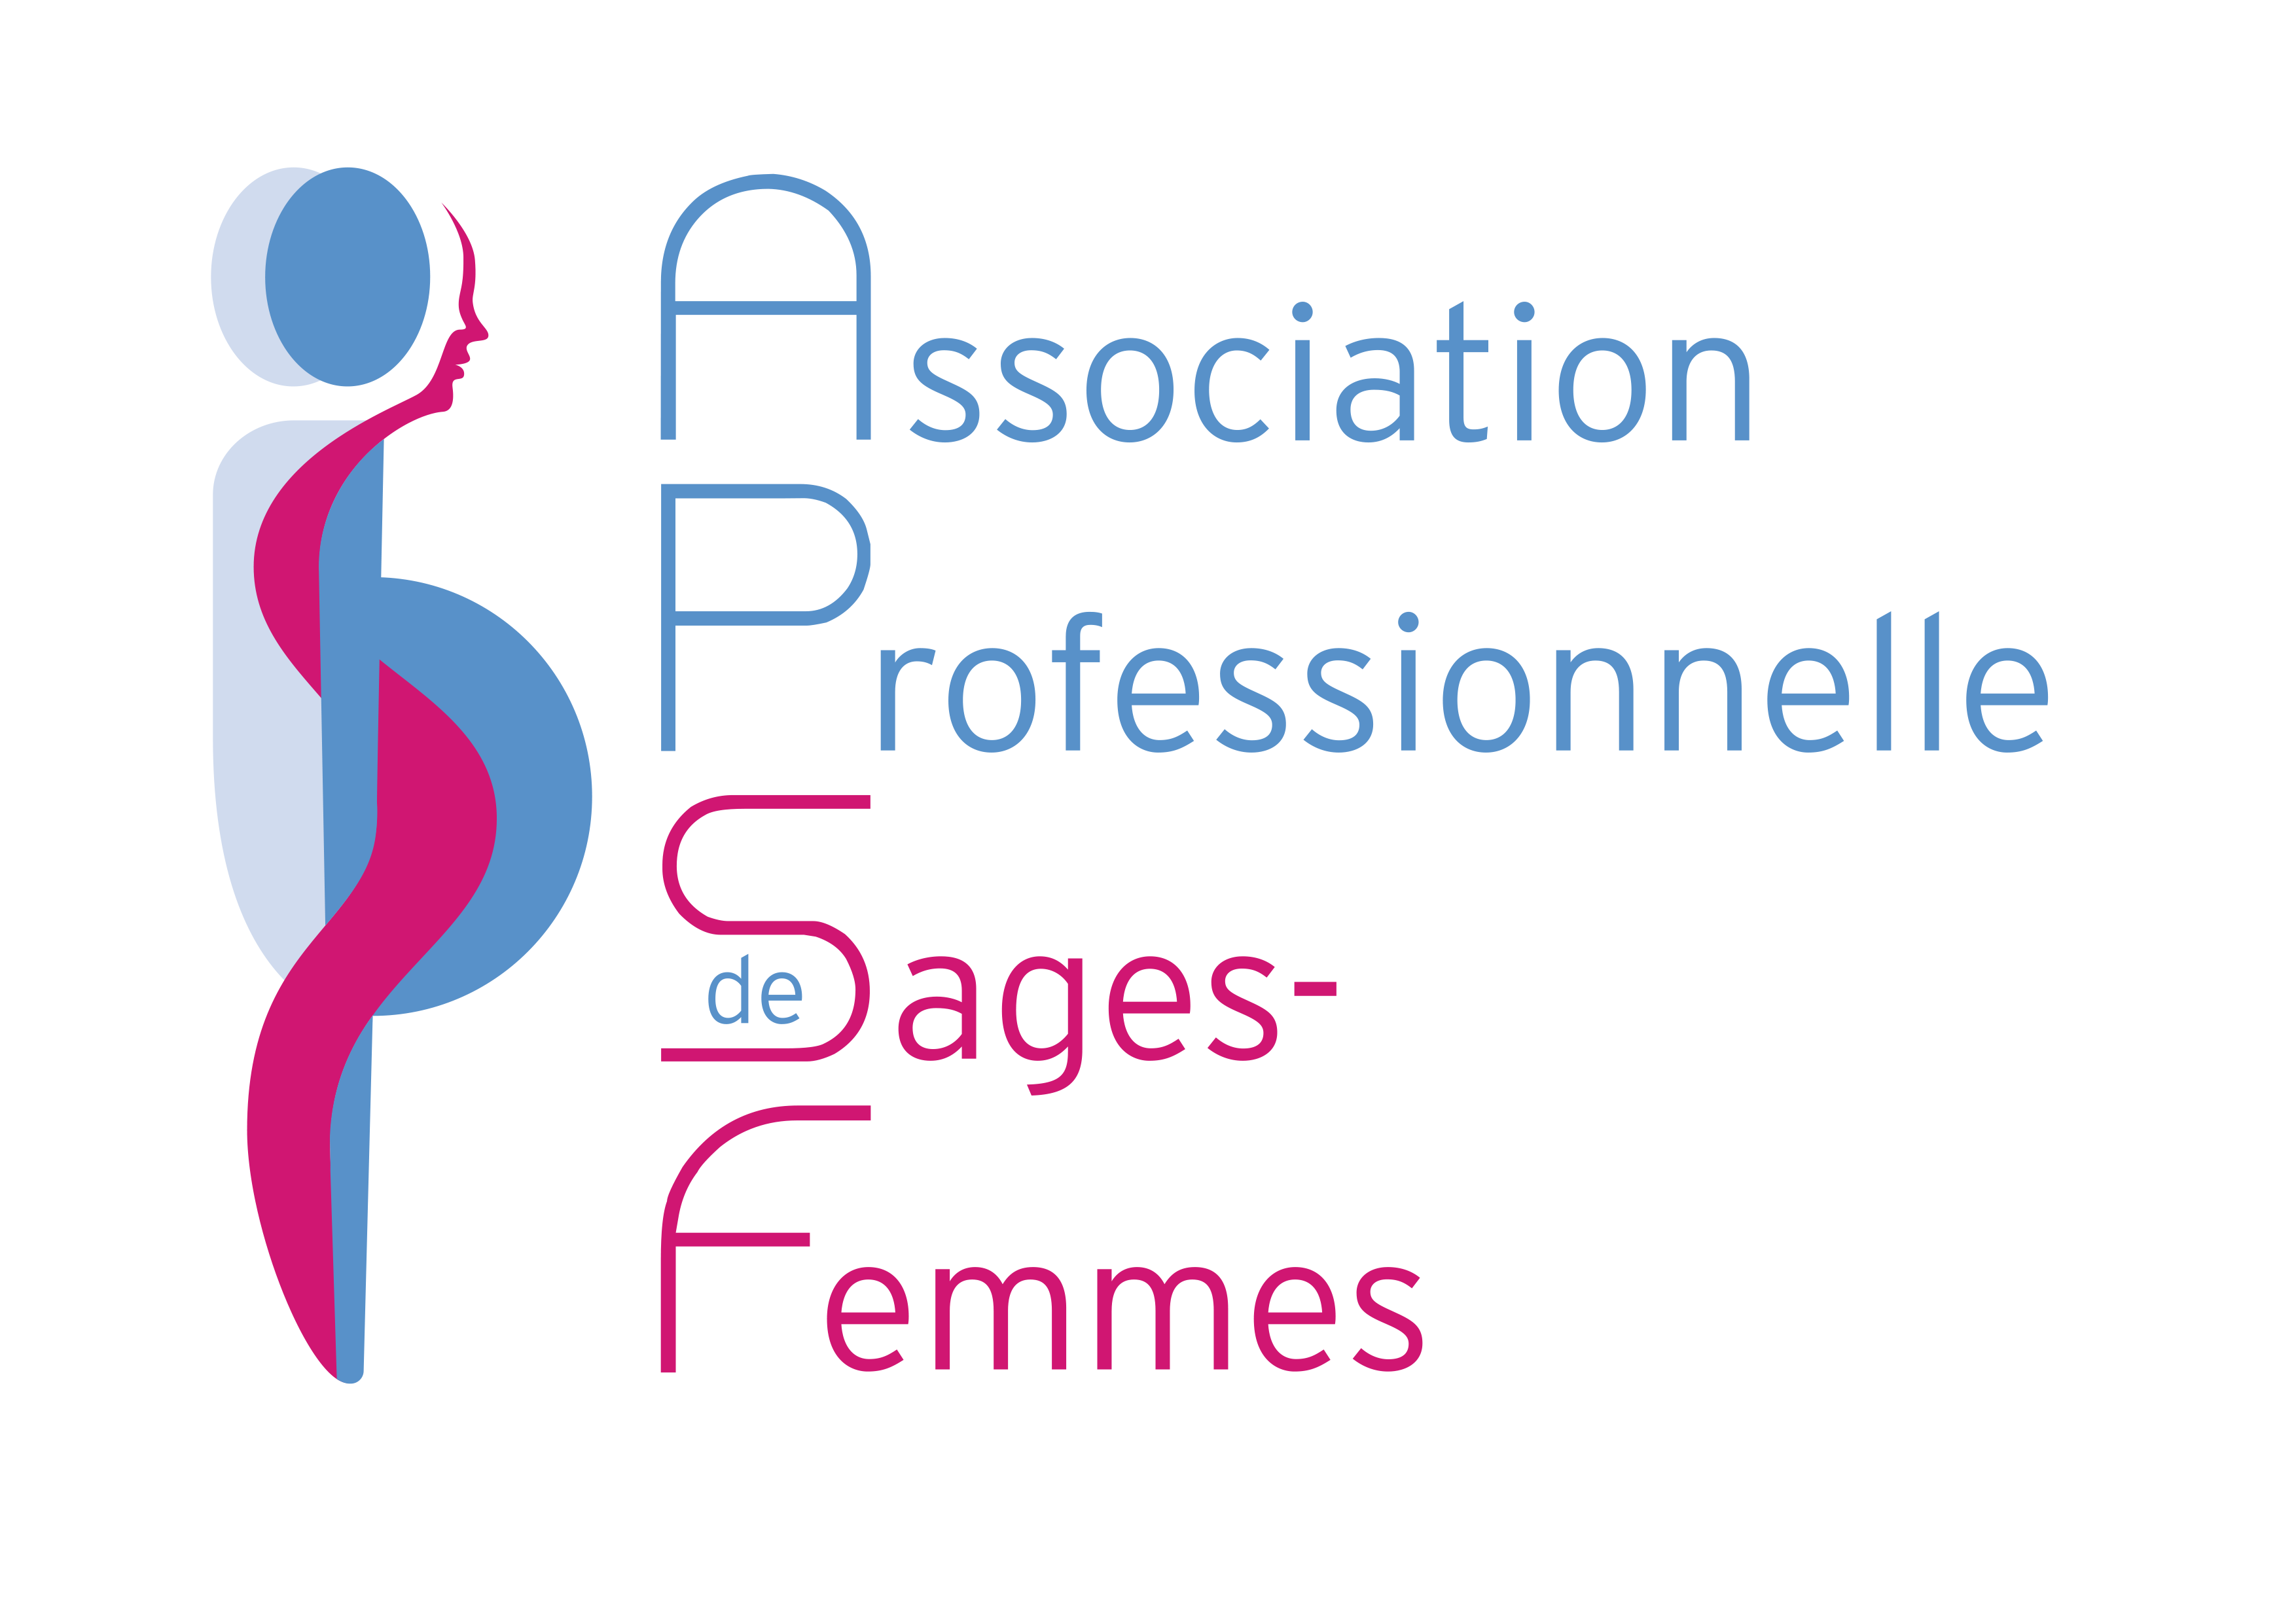 52èmes Assises Nationales des Sages-Femmes - 35ème Session Européenne et Francophones